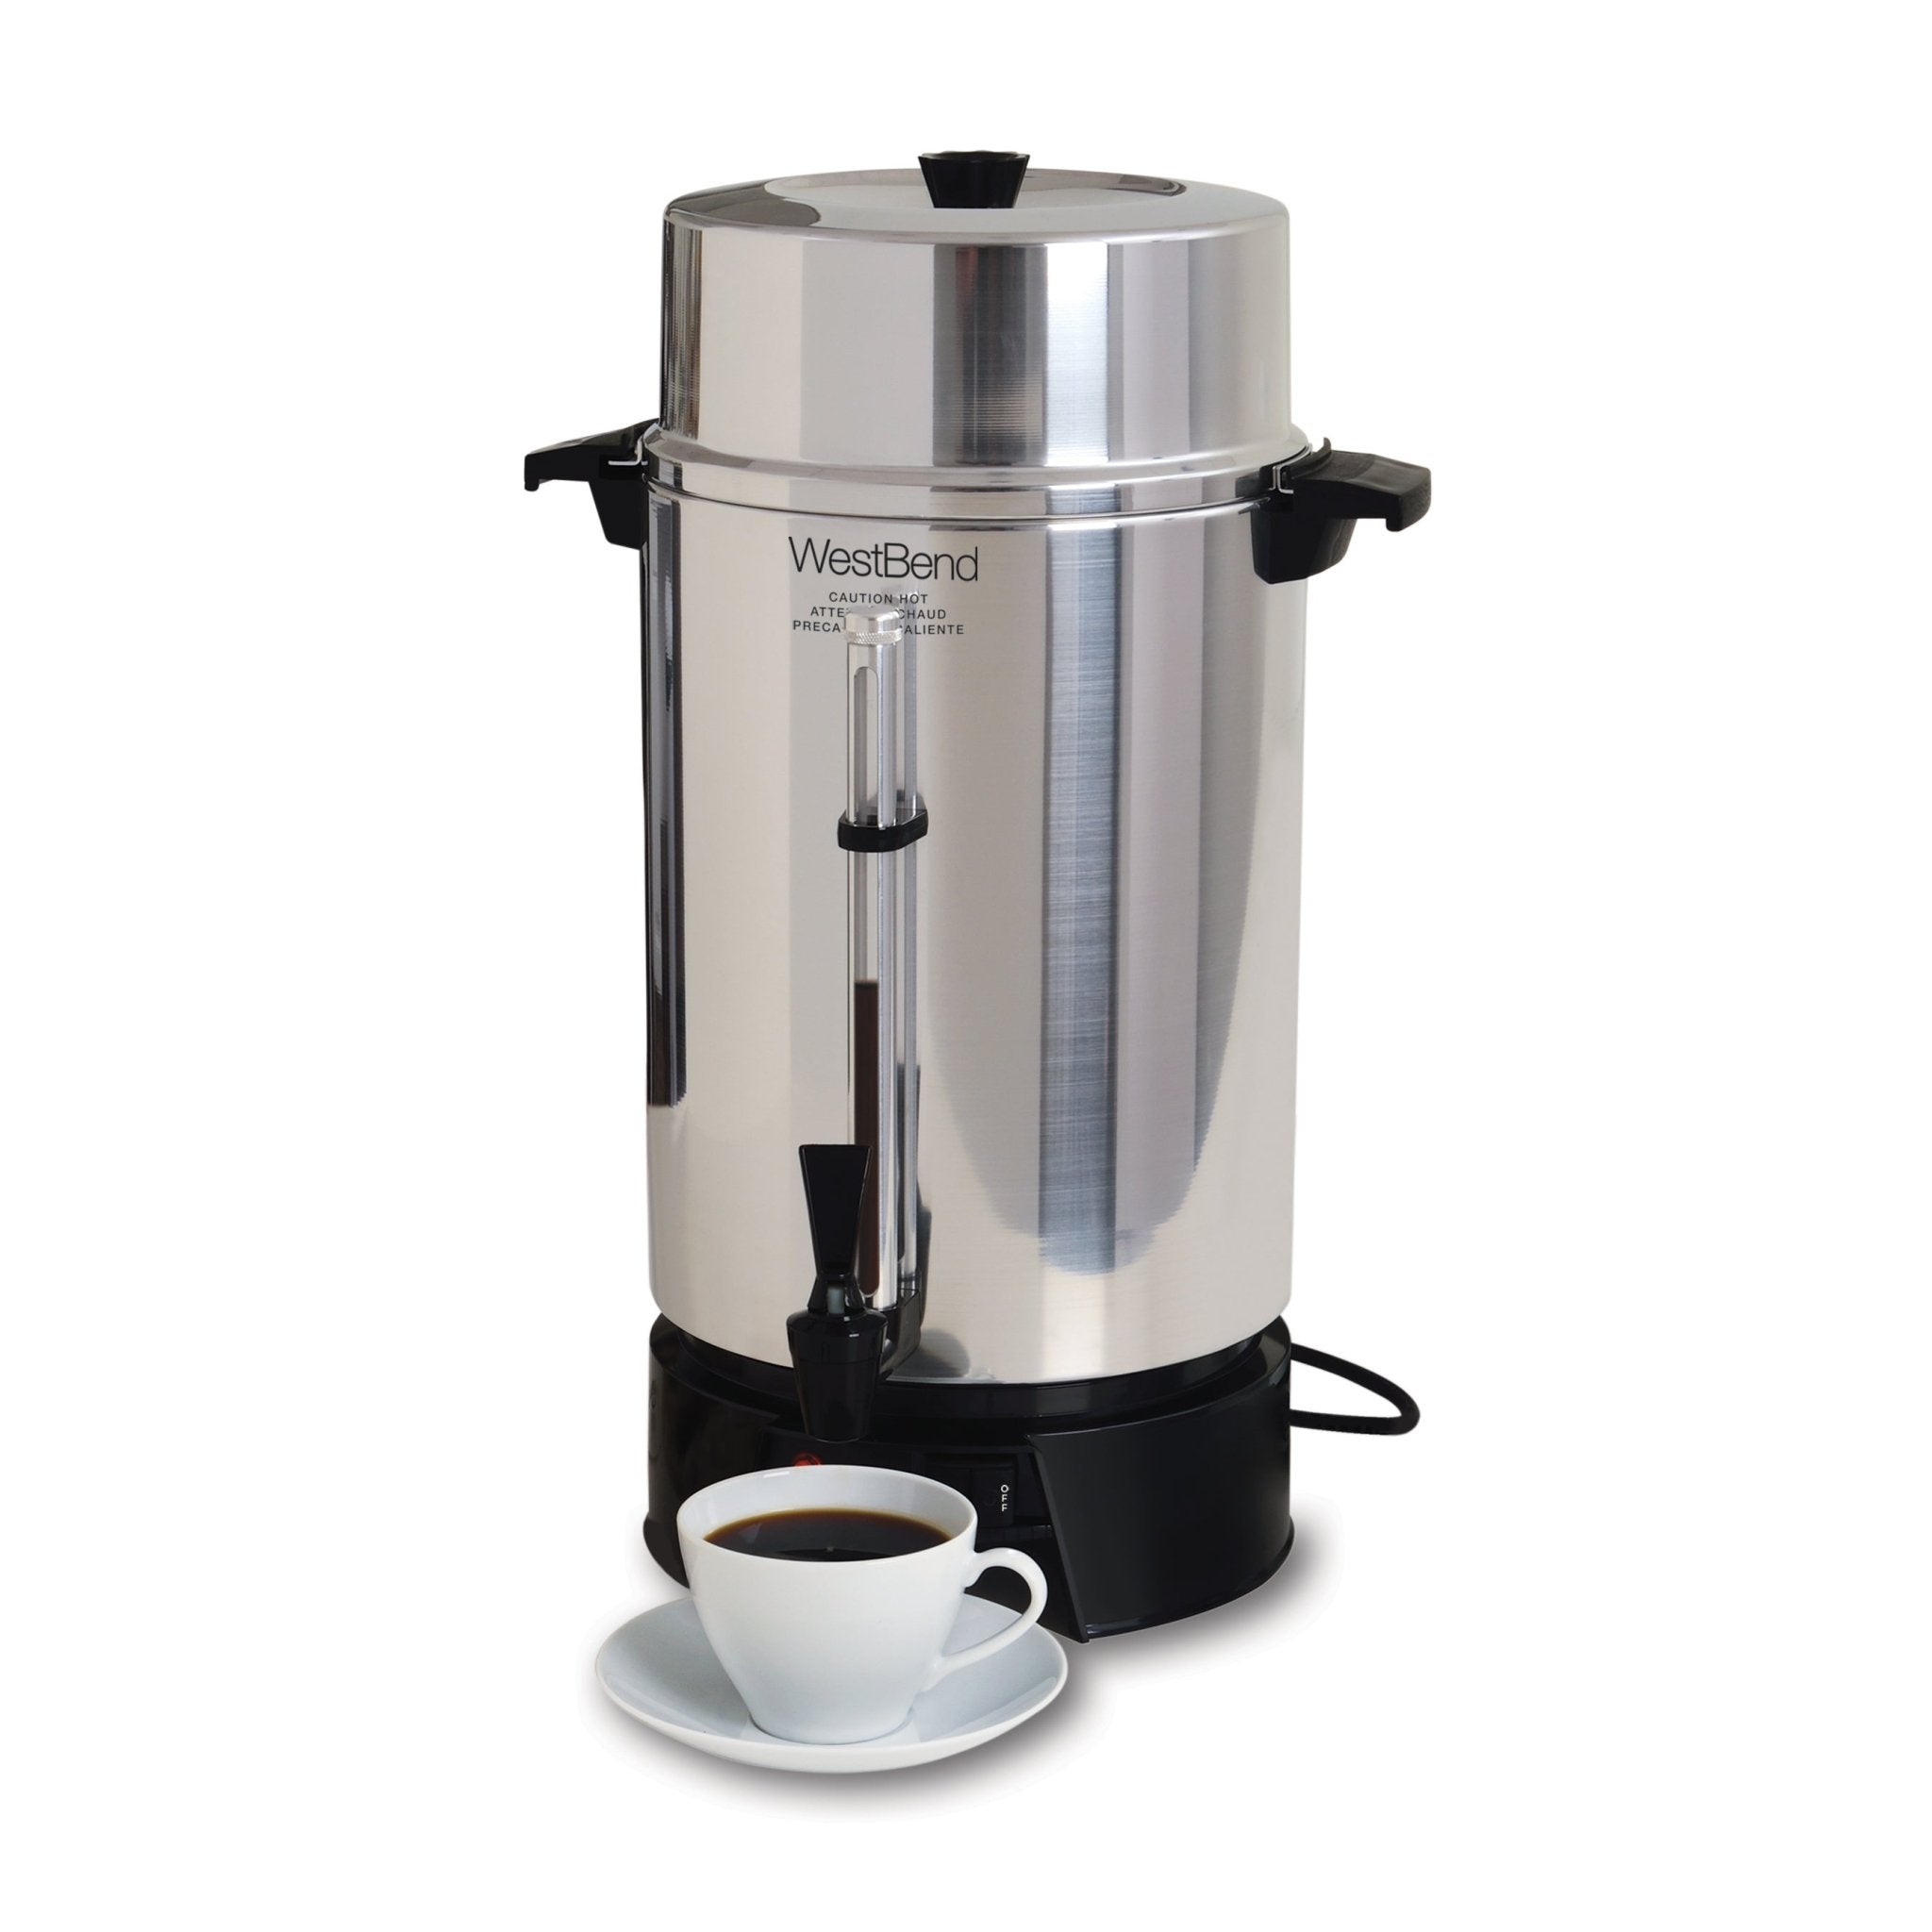 West Bend 100 Cup Coffee Urn - 33600